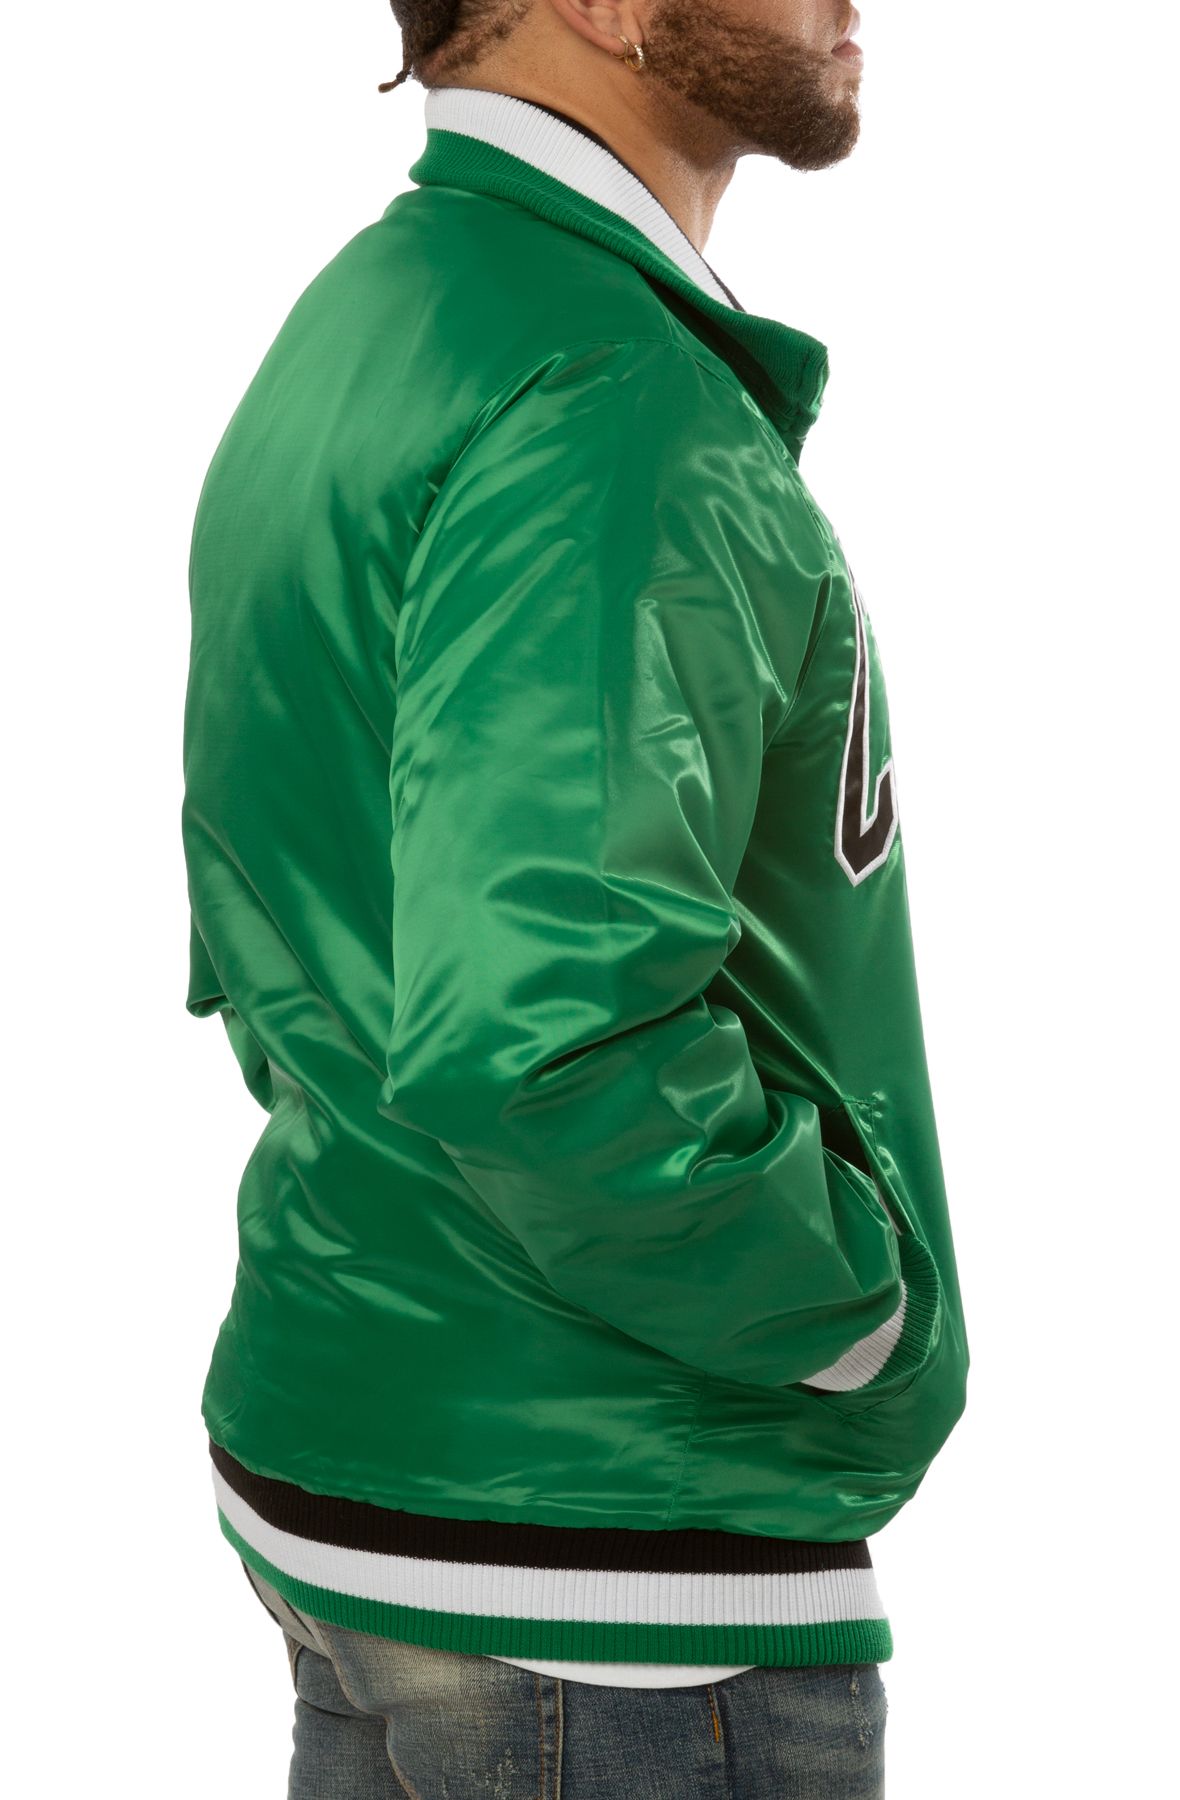 Zipway Green Boston Celtics Jacket & Pants - Kids, Best Price and Reviews